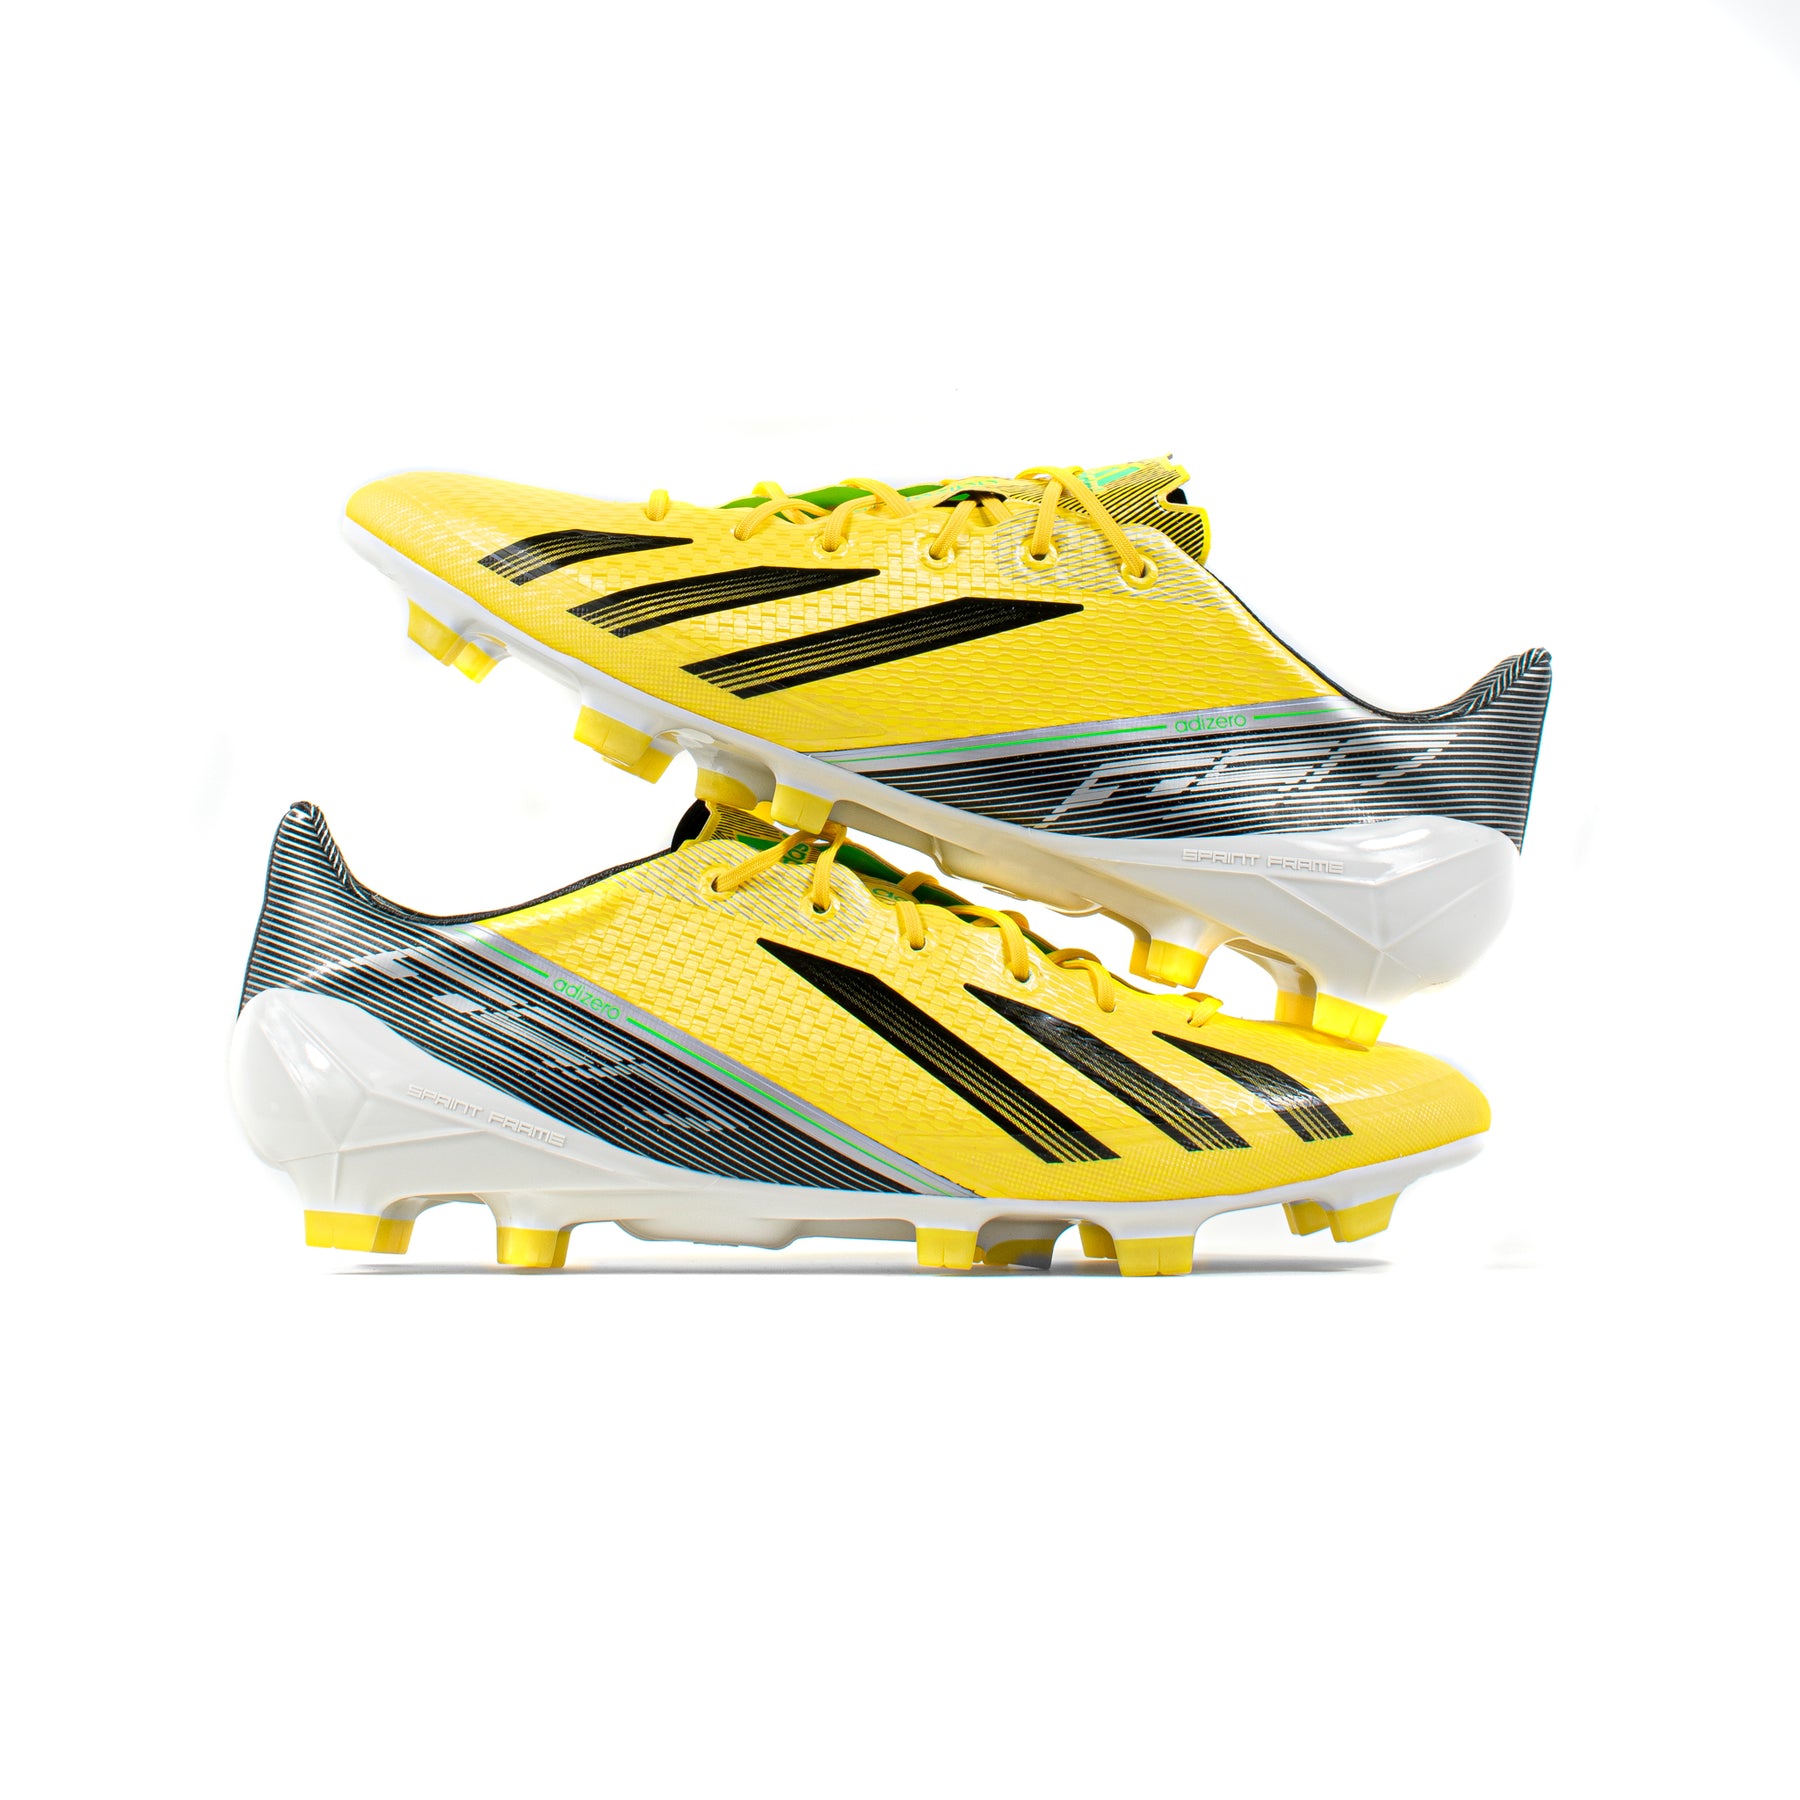 Adidas F50 Adizero Yellow FG Classic Soccer